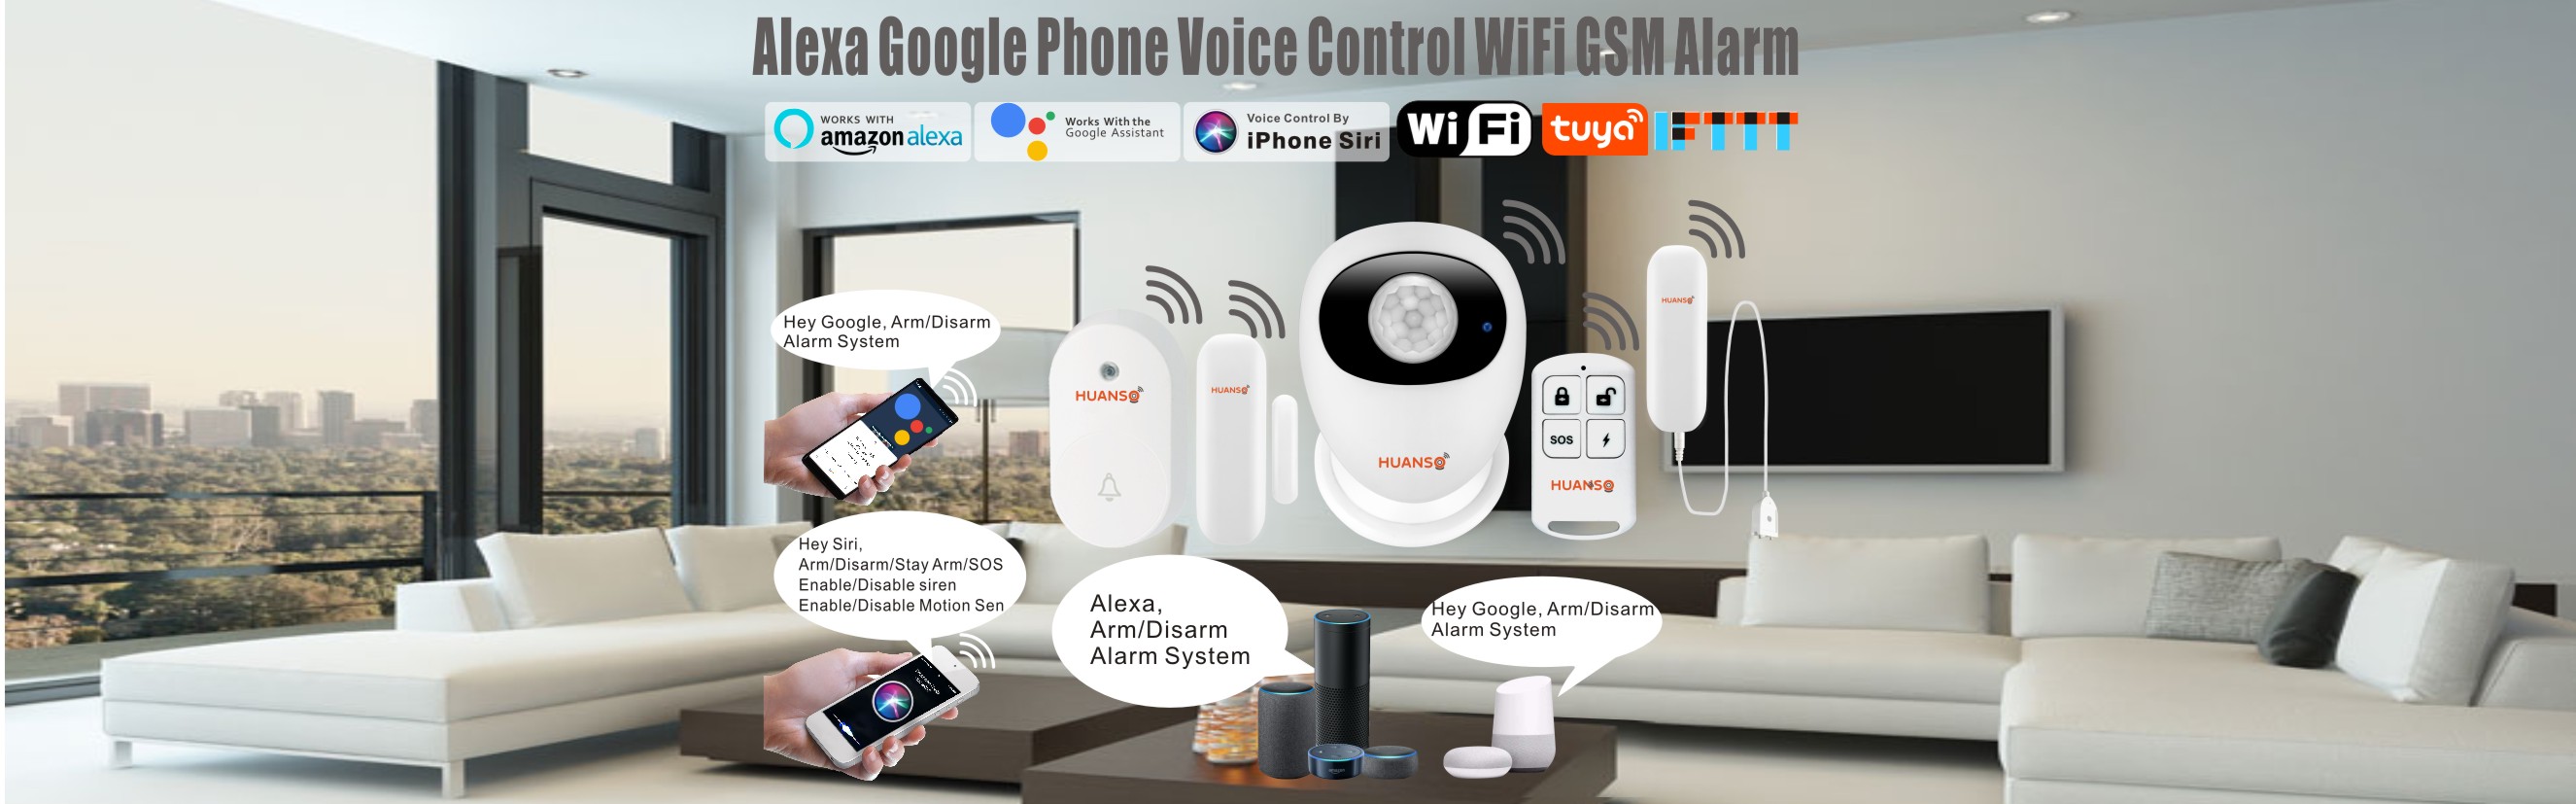 Alexa Google Voice control WiFi